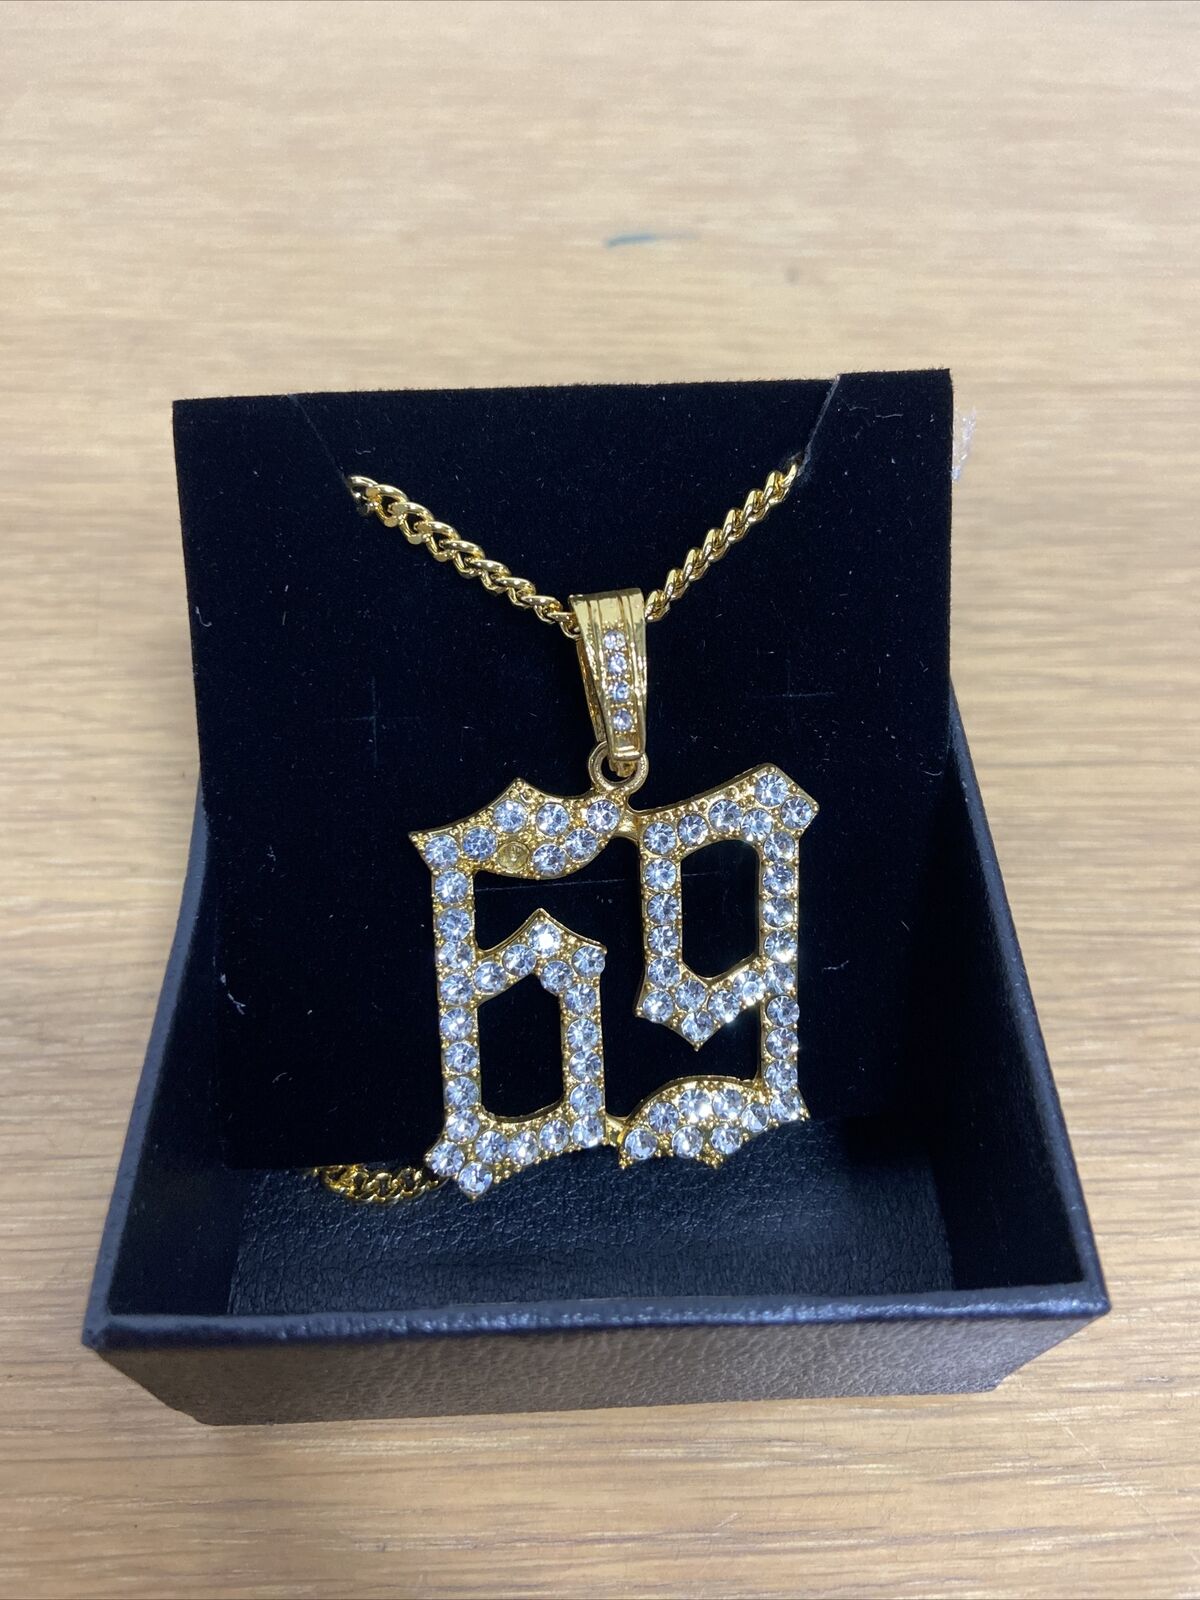 TSANLY Necklace 6ix9ine Medallion Pendant 24” Rope Chain Gold Tone Rhinestones